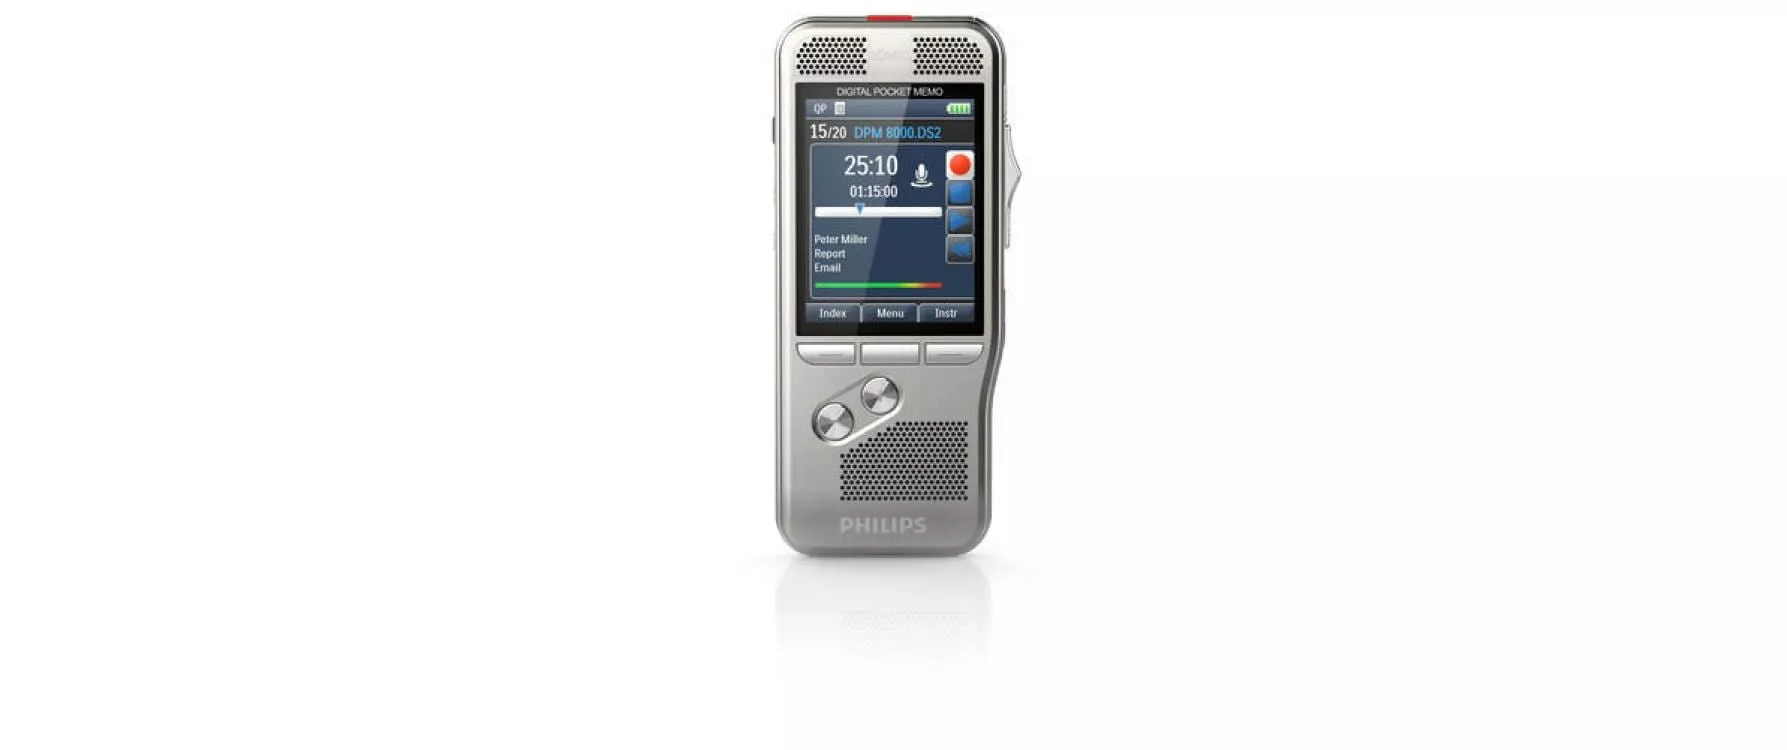 Dictaphone Digital Pocket Memo DPM8100 Integrator